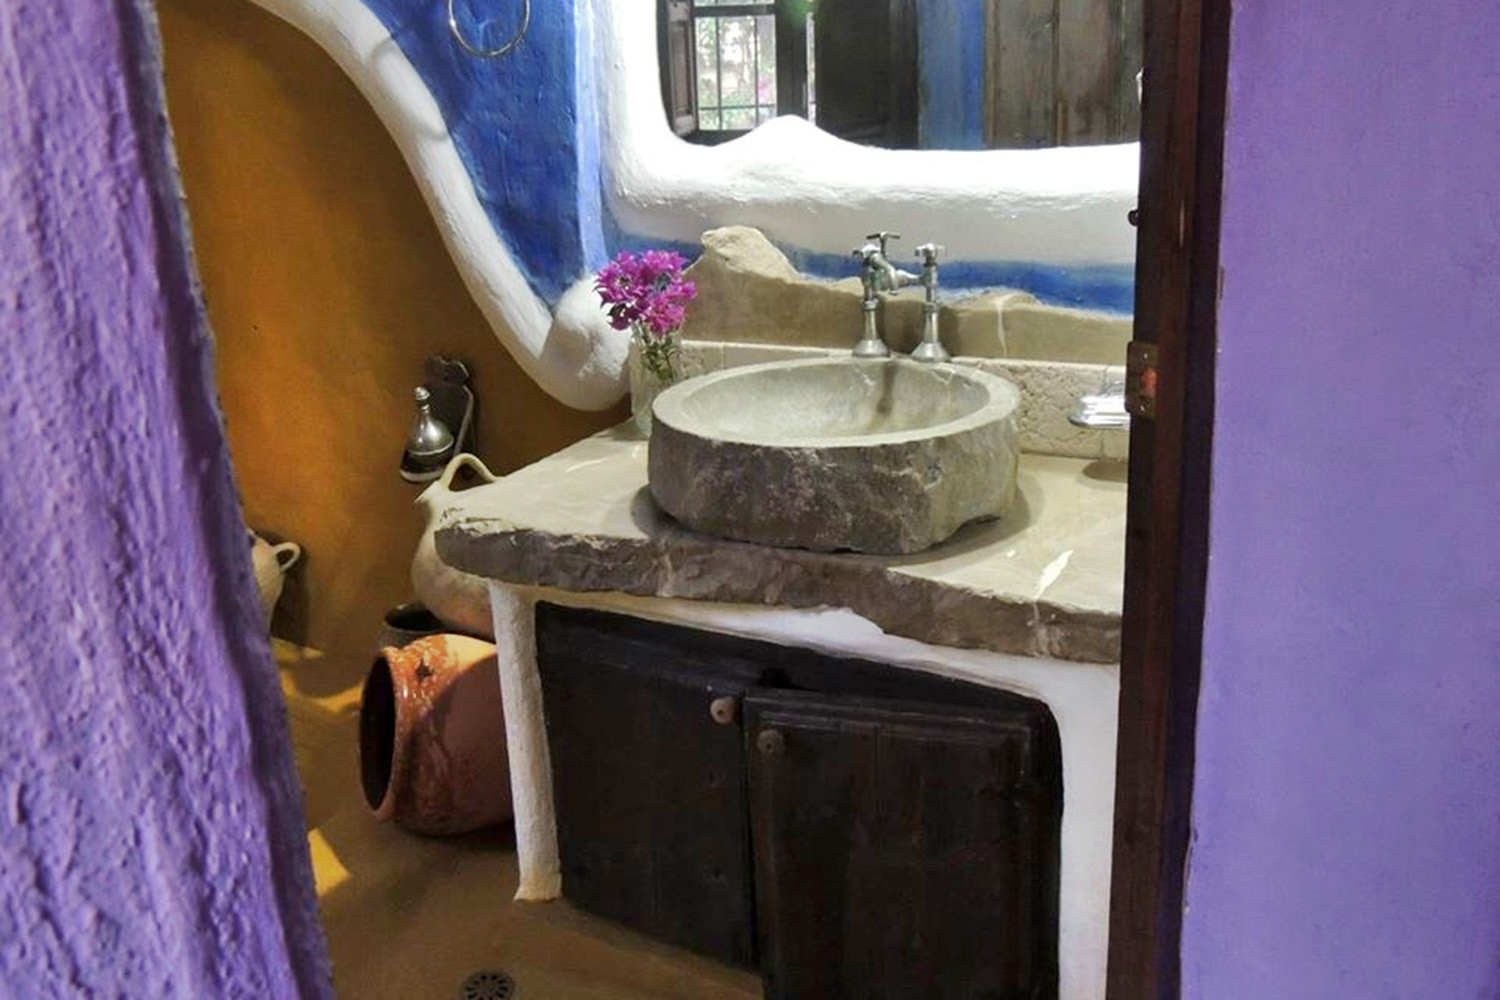 The cave bathroom